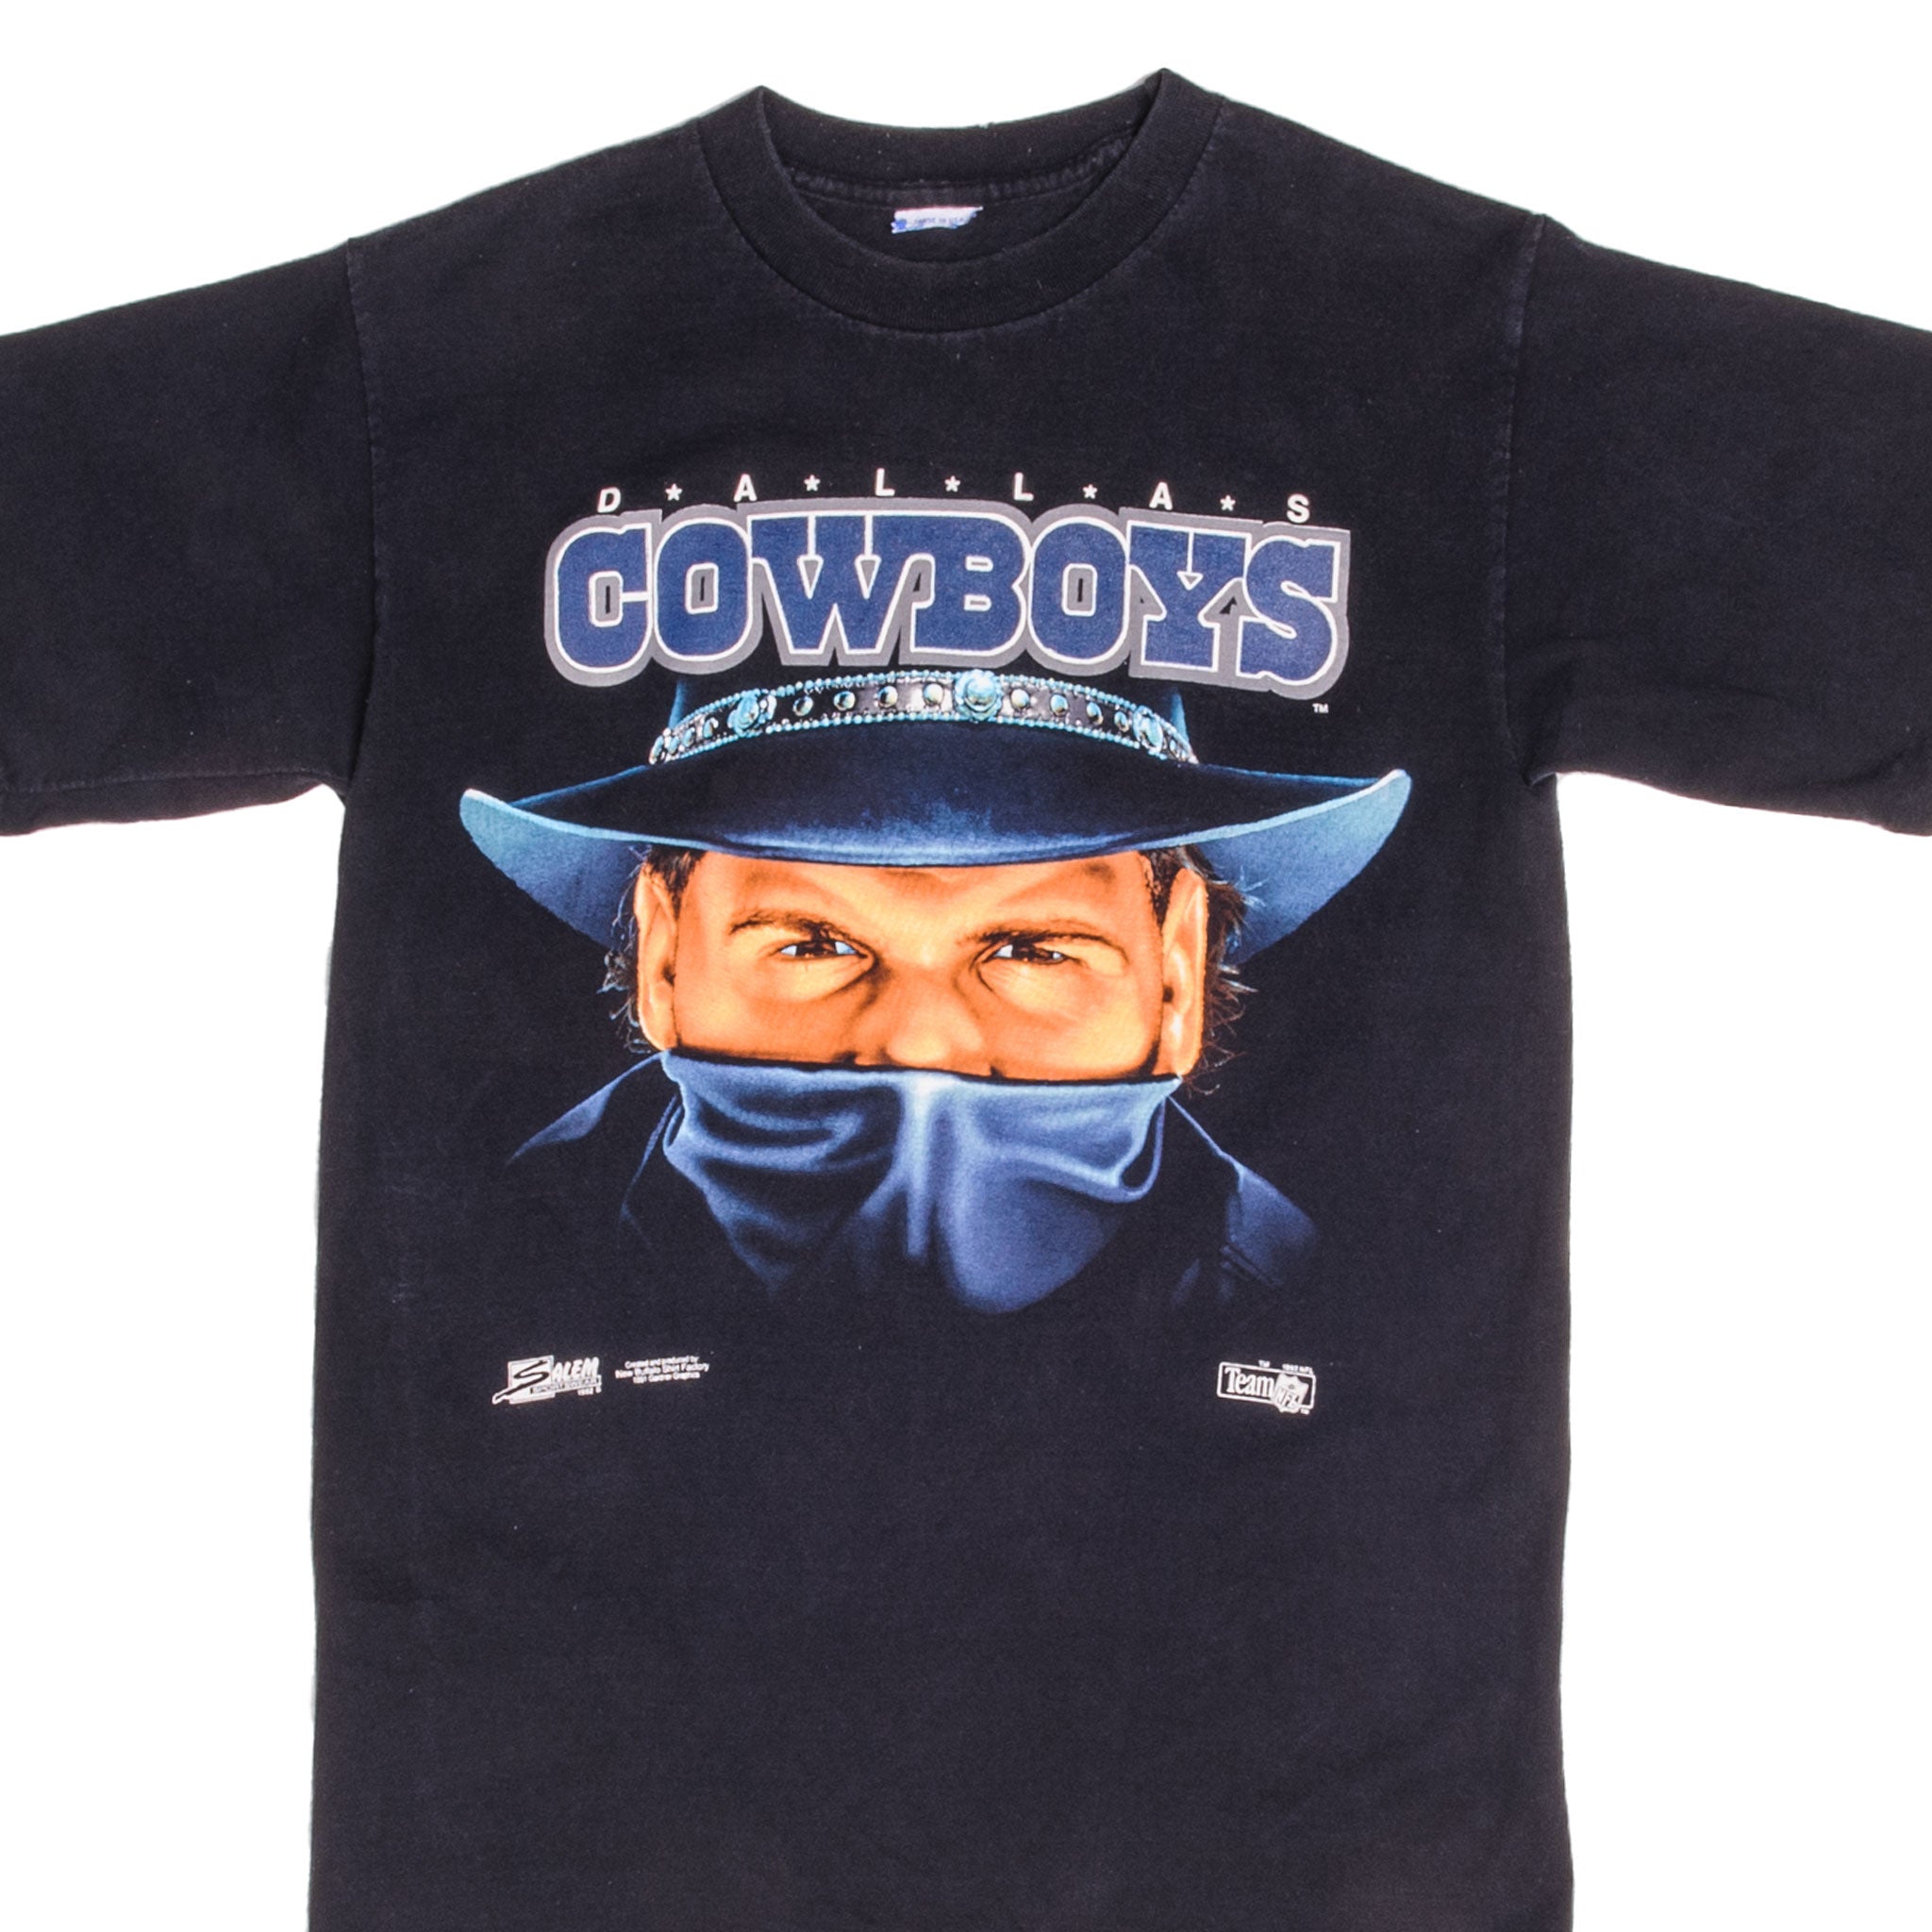 NFL Dallas Cowboys T-Shirts in Dallas Cowboys Team Shop 